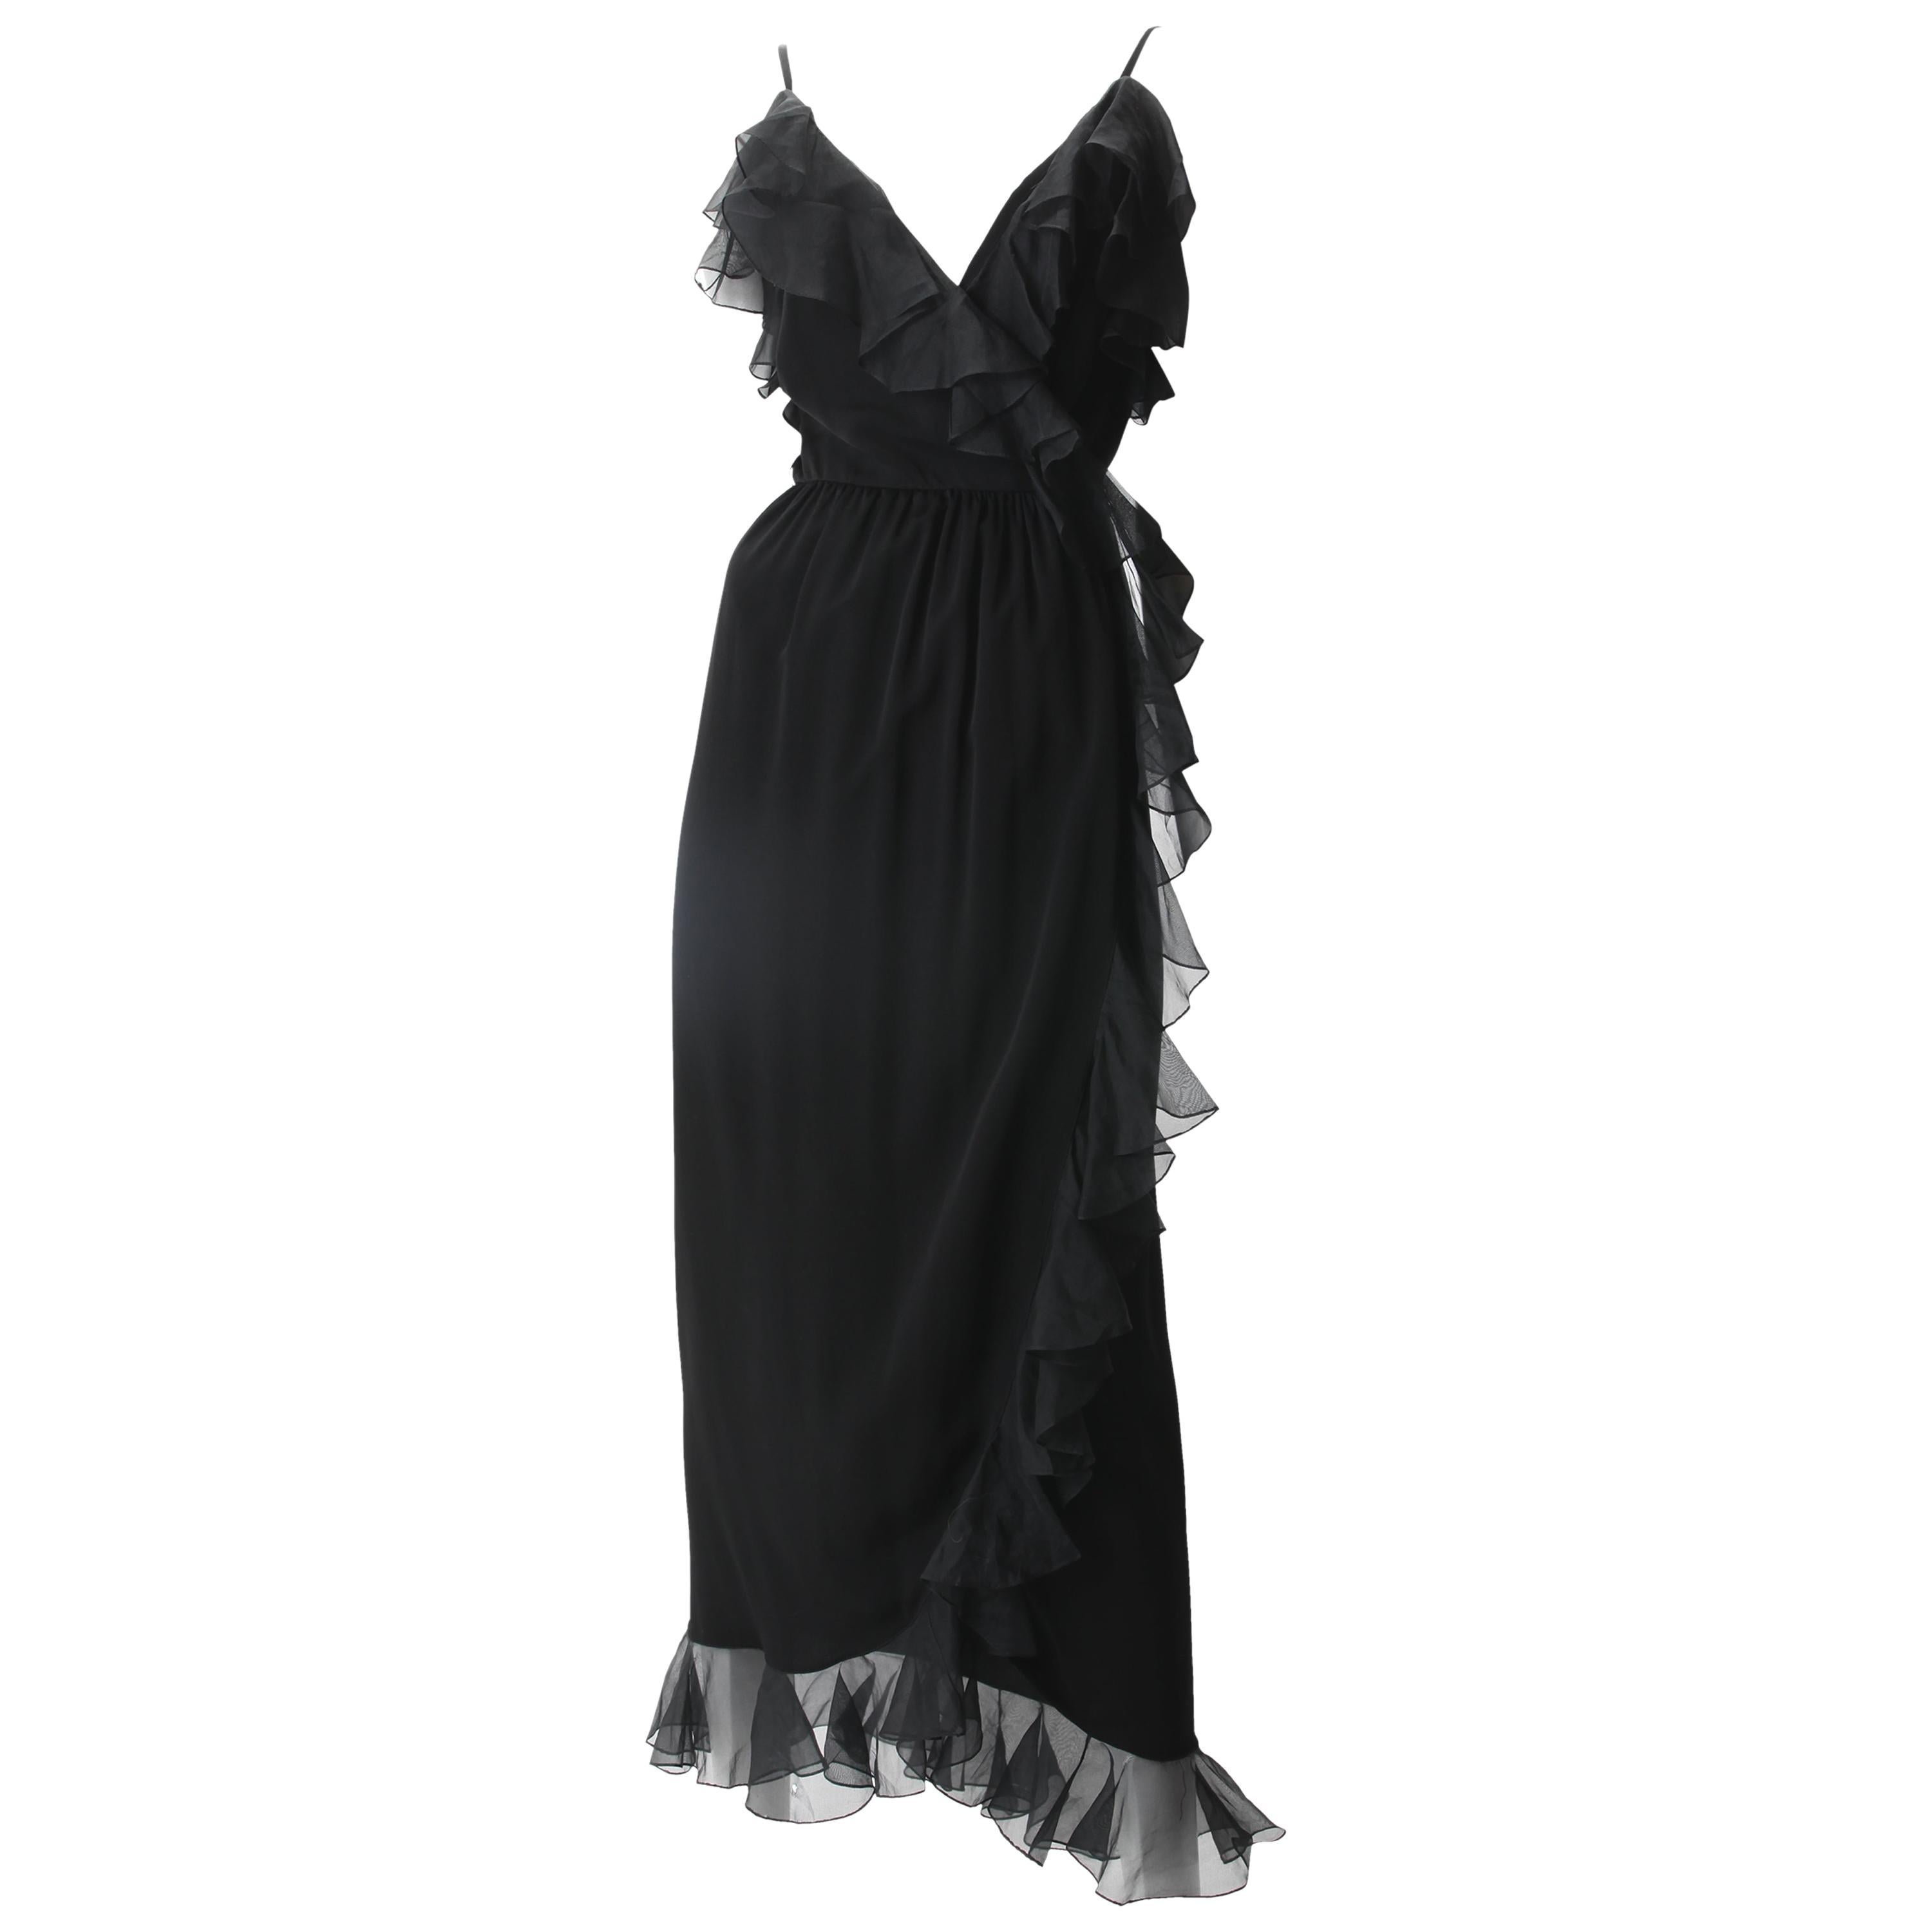 Adele Simpson Black Chiffon Wrap Dress, c.1970s.